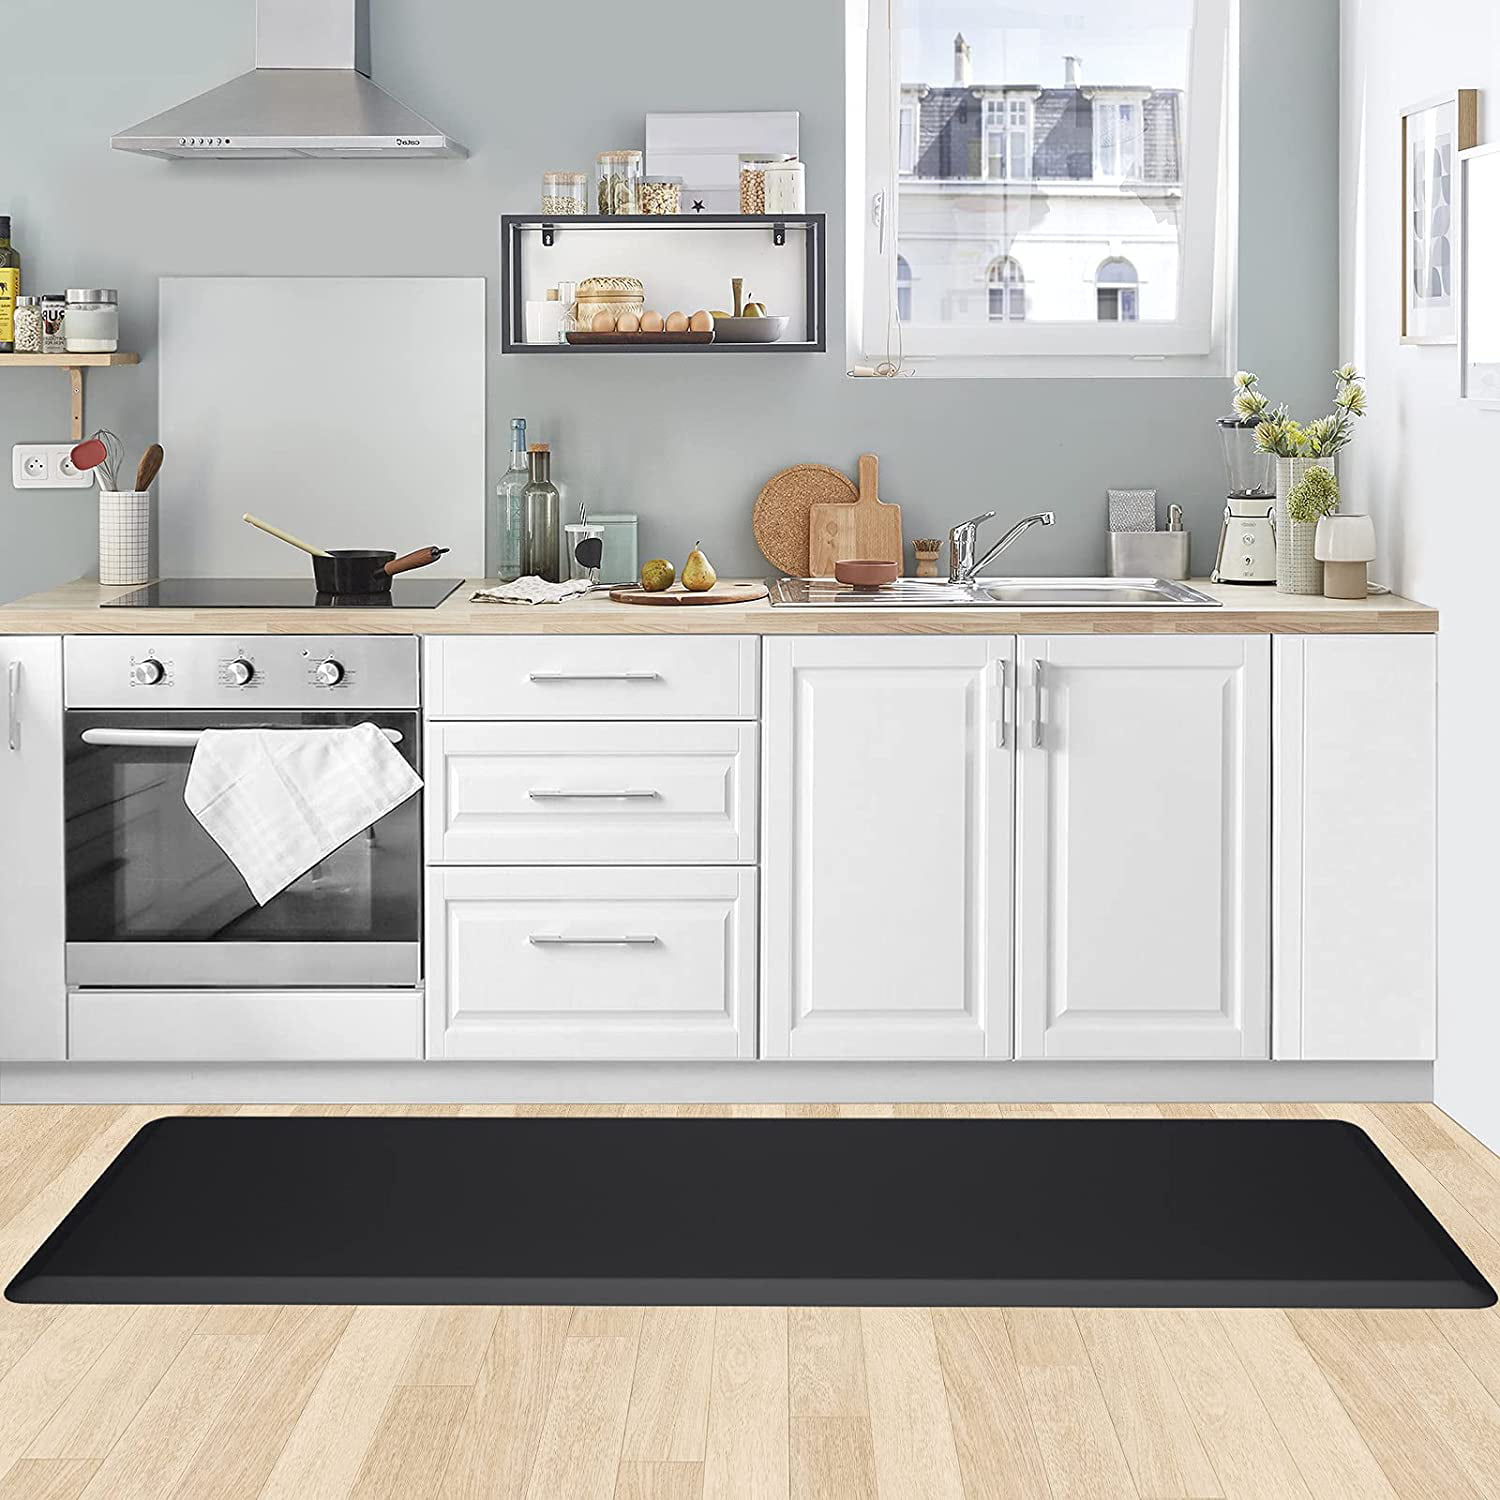 Ray Star Anti Fatigue Floor Mat 20''x39'',0.39 inch Thick Kitchen Matt for Standing, Size: 20 inch x 39 inch x 0.39 inch